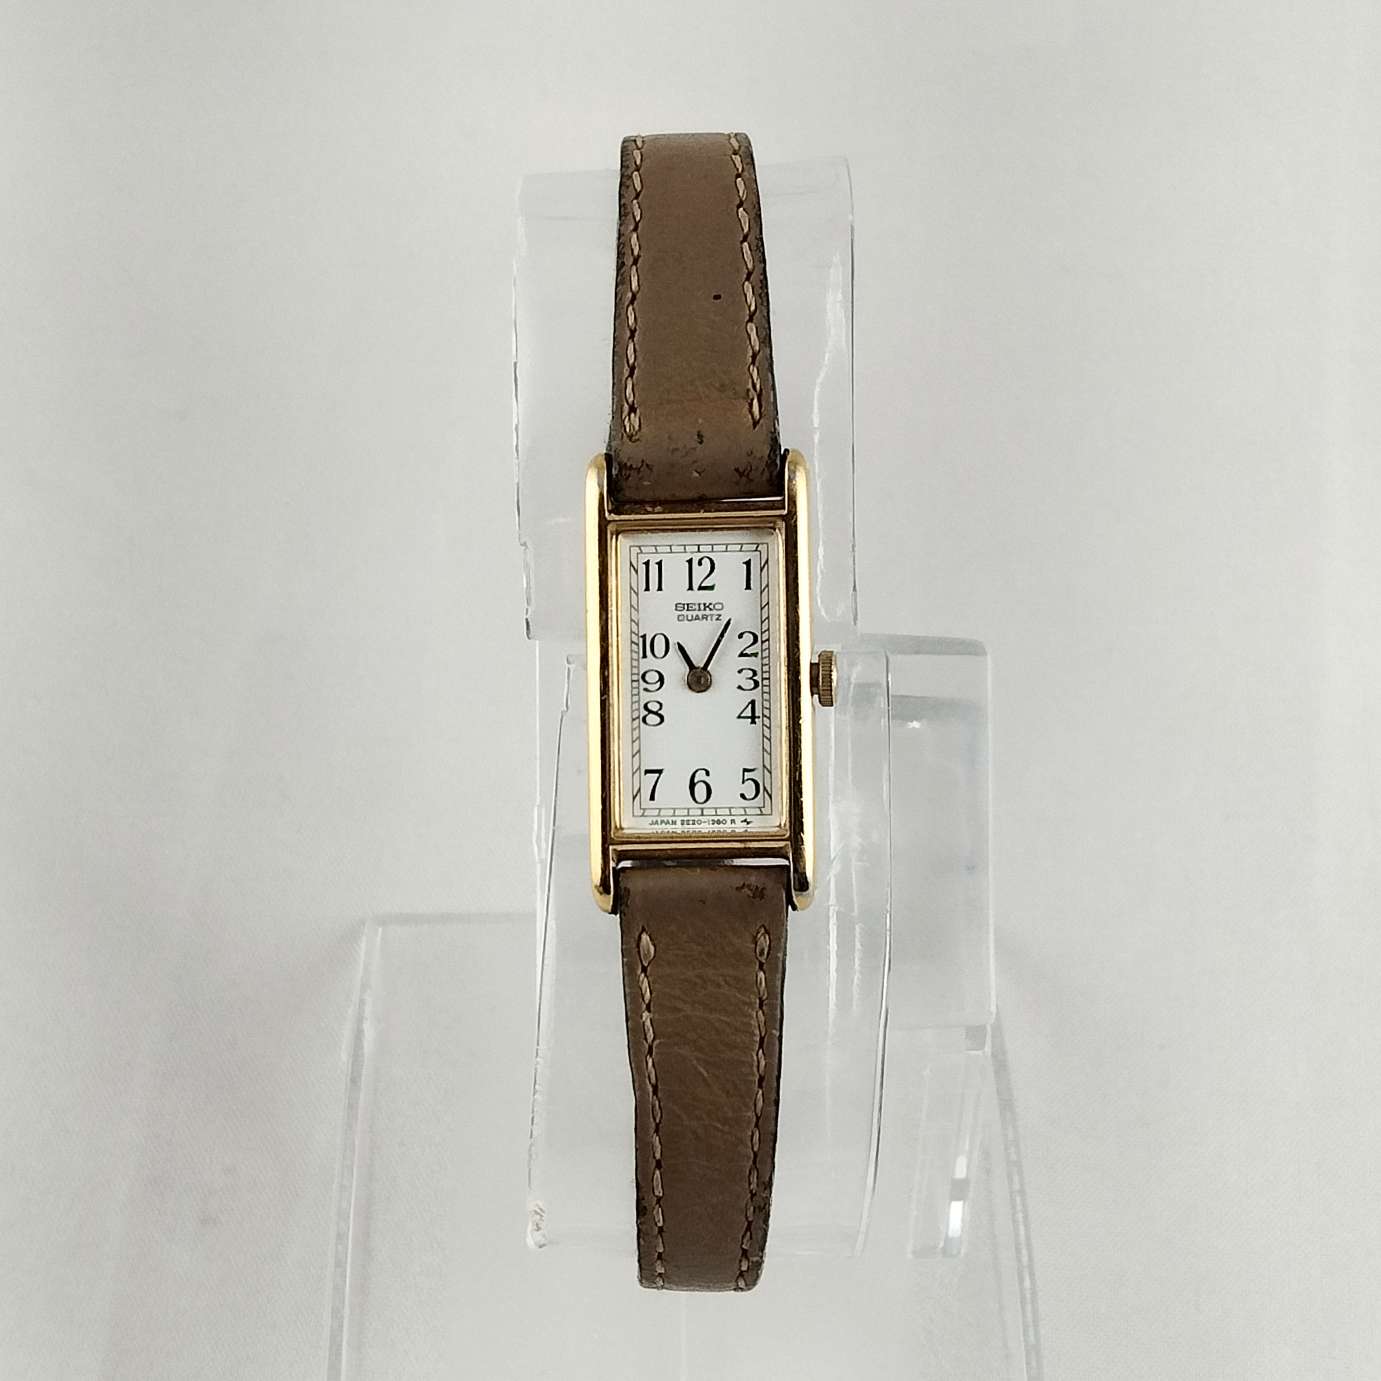 Seiko Women's Watch, Thin Rectangular Dial, Brown Leather Strap